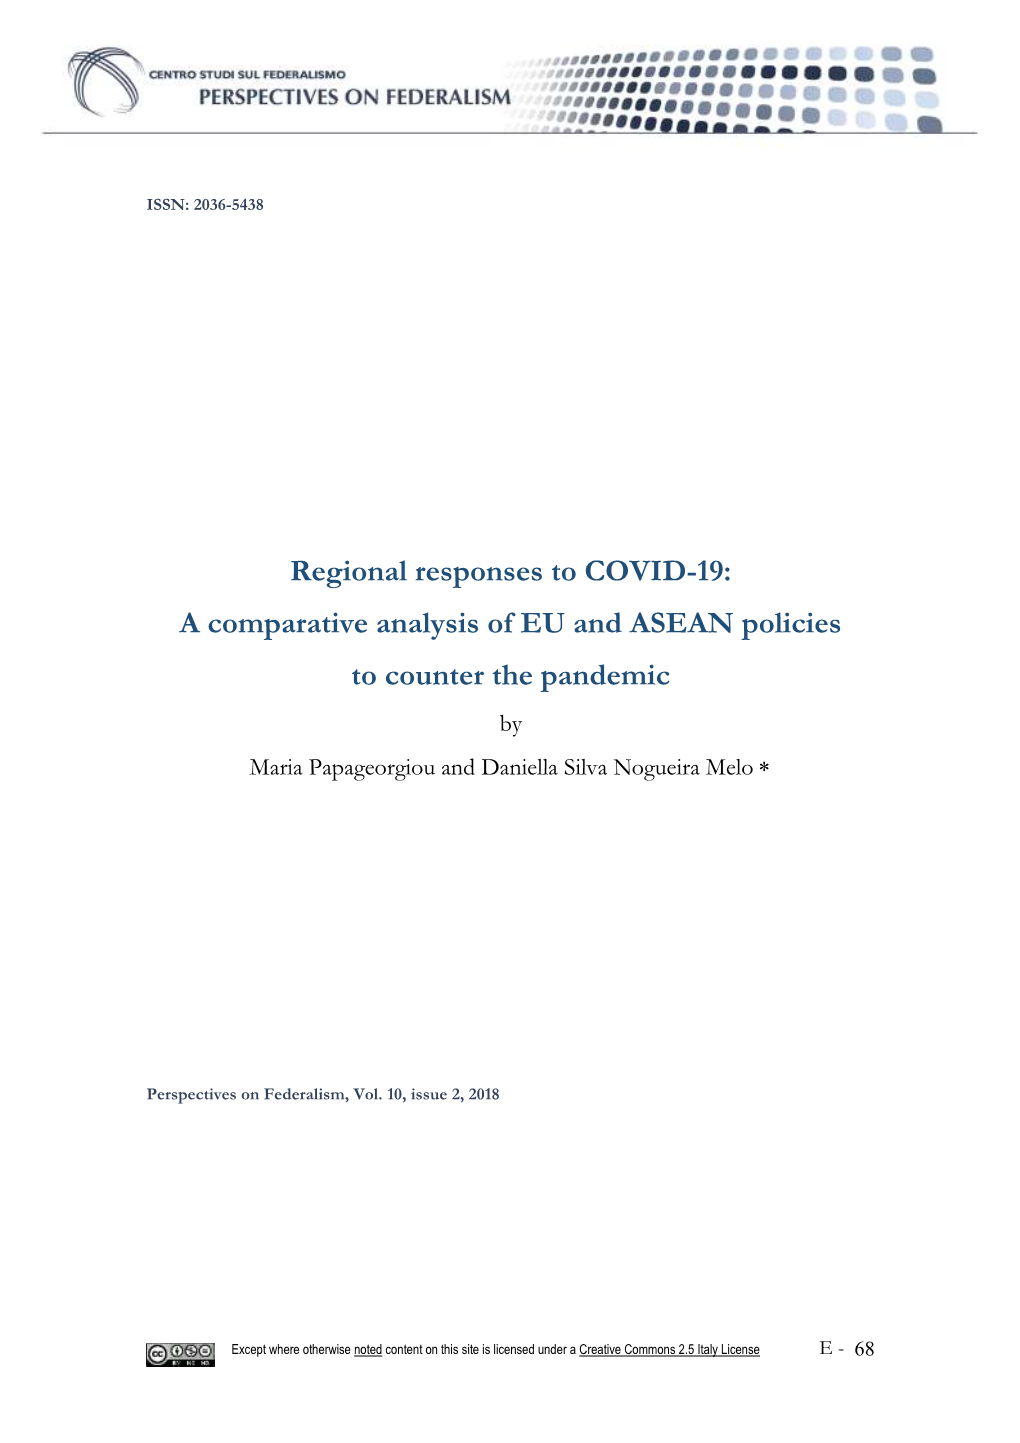 A Comparative Analysis of EU and ASEAN Policies to Counter the Pandemic by Maria Papageorgiou and Daniella Silva Nogueira Melo 